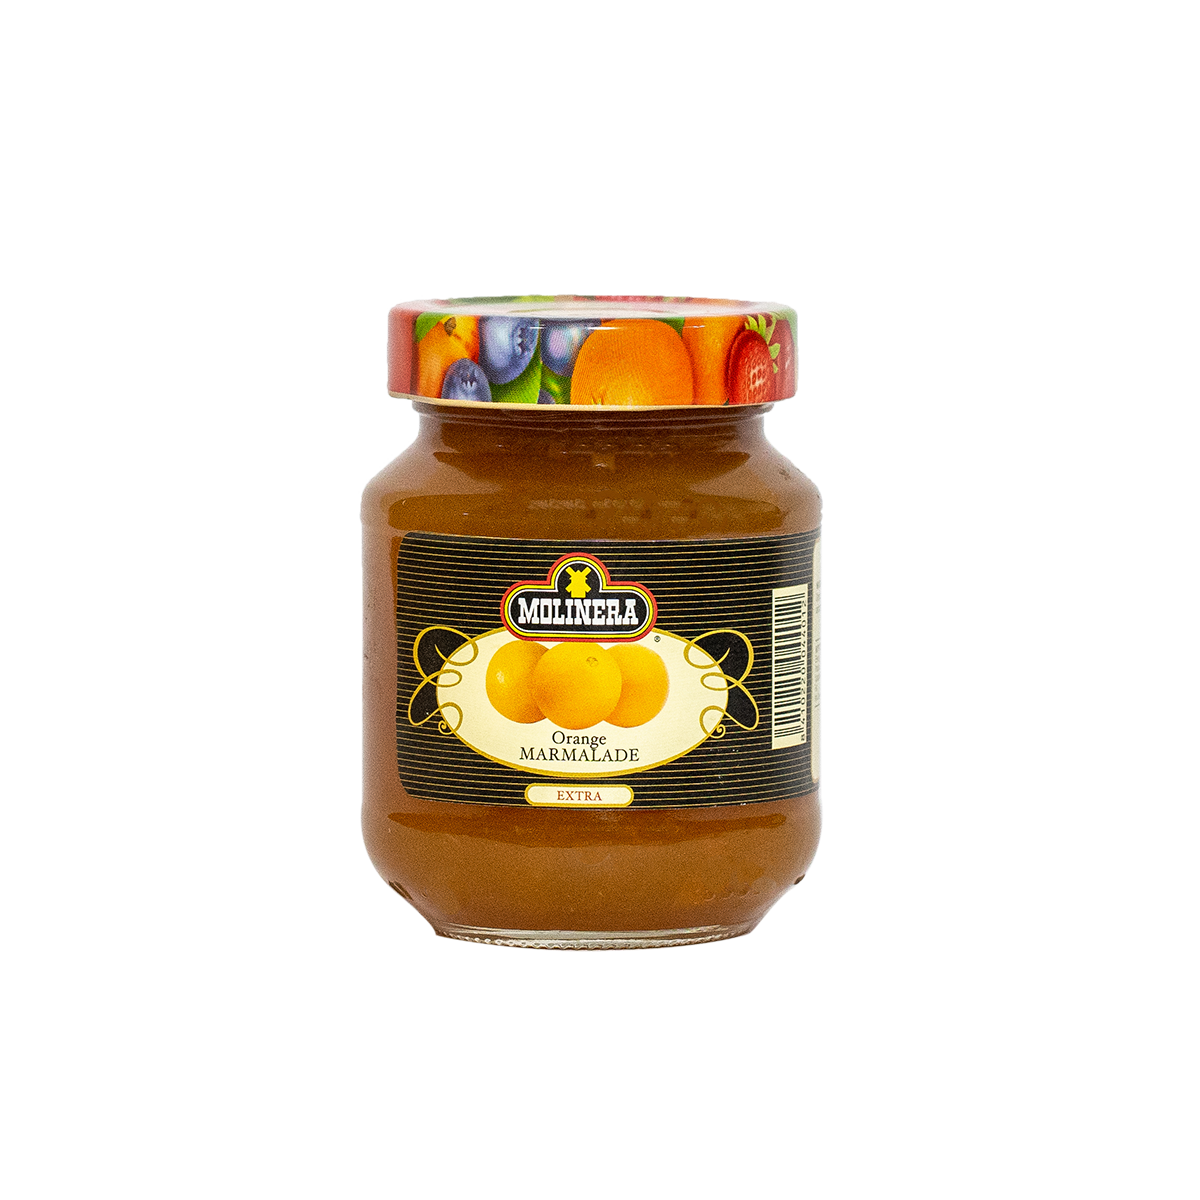 Molinera Orange Marmalade